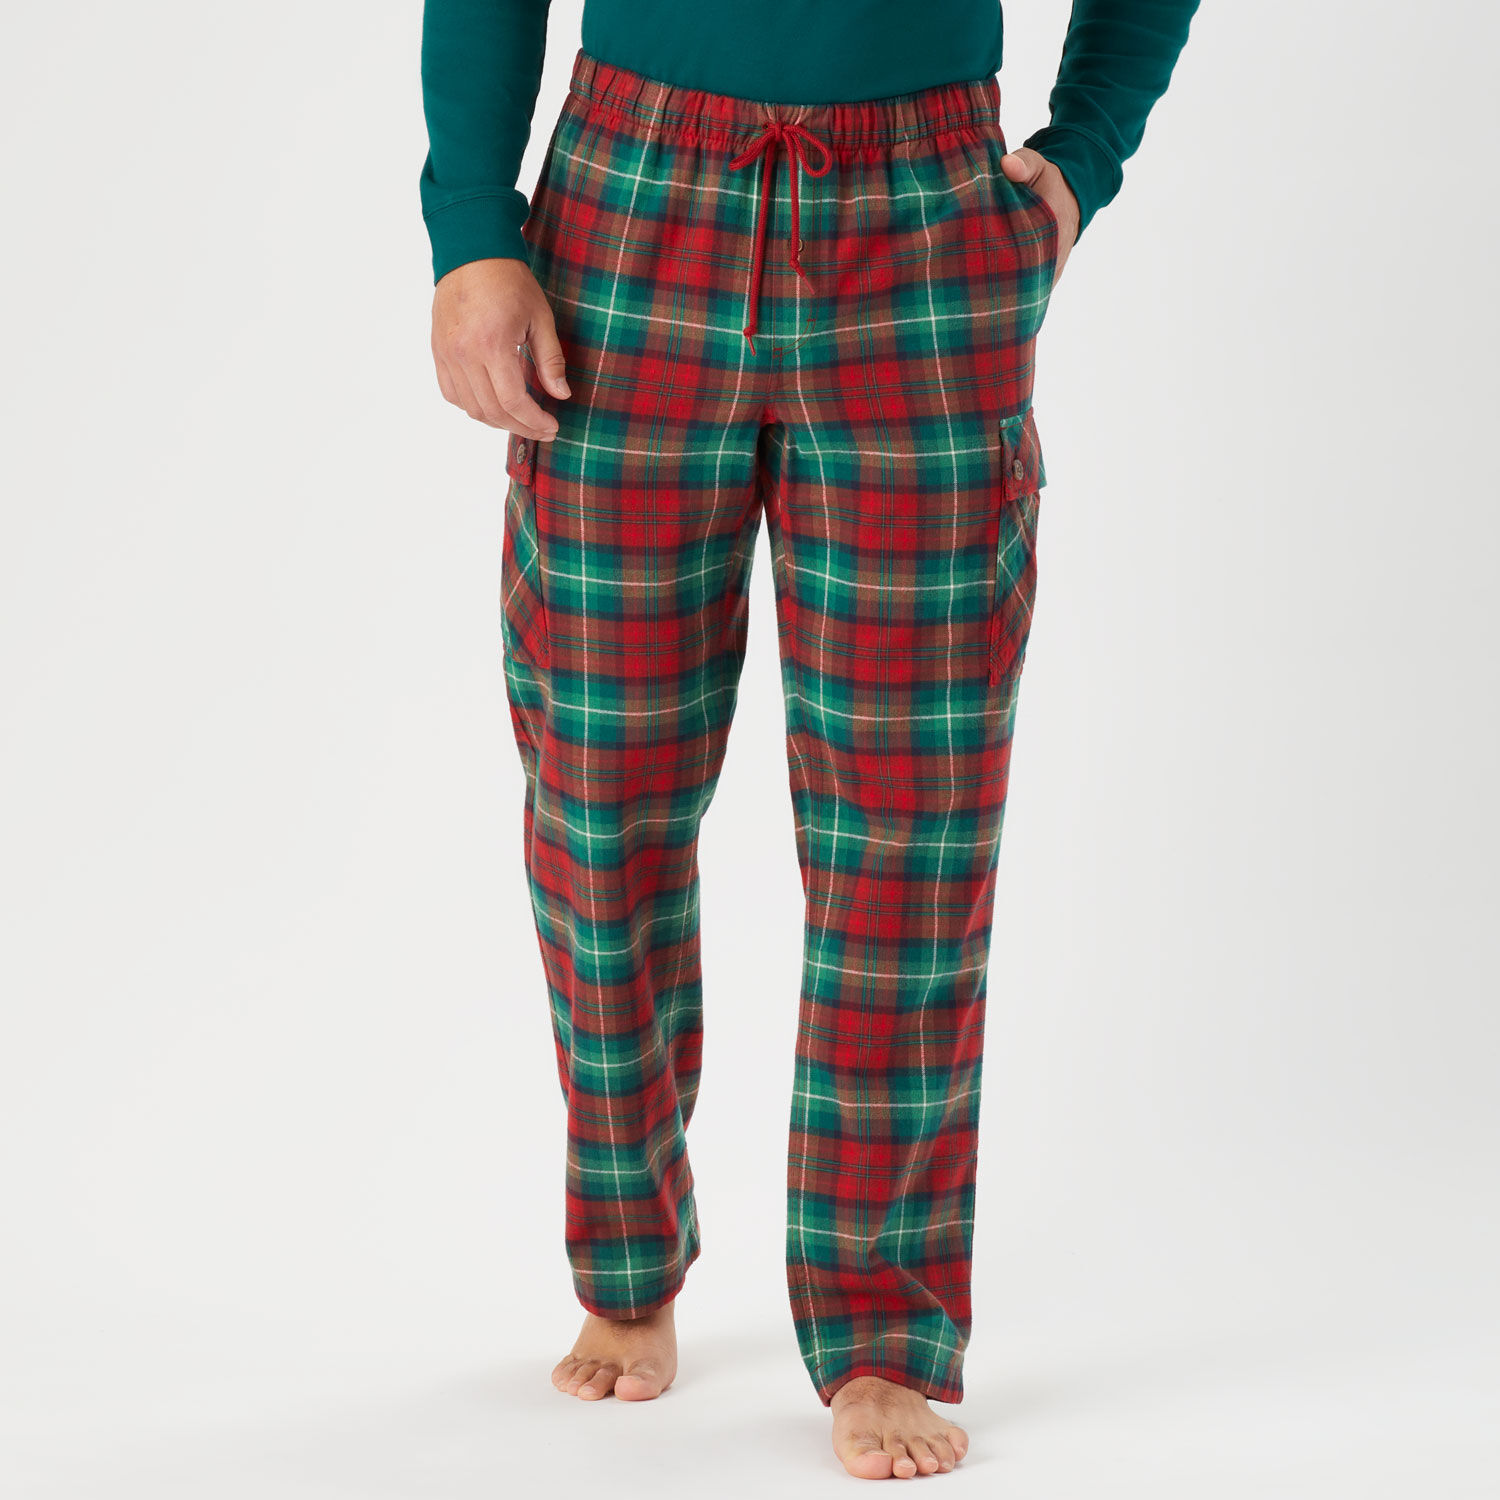 Mens Scotch Plaid Flannel Sleep Pants  Pajamas at LLBean